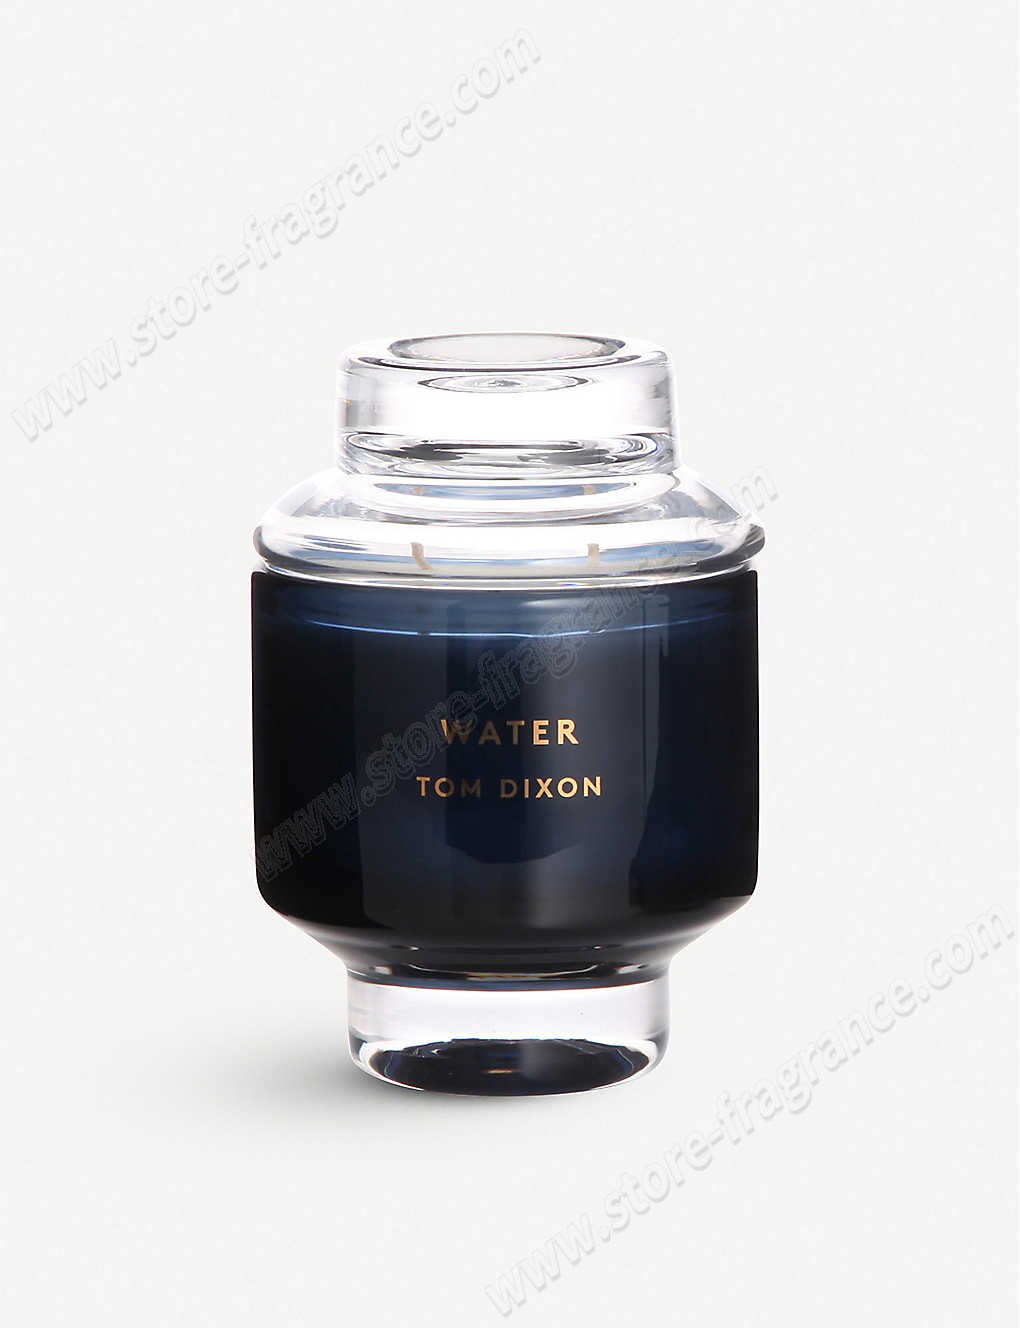 TOM DIXON/Scent Water medium candle ✿ Discount Store - -0